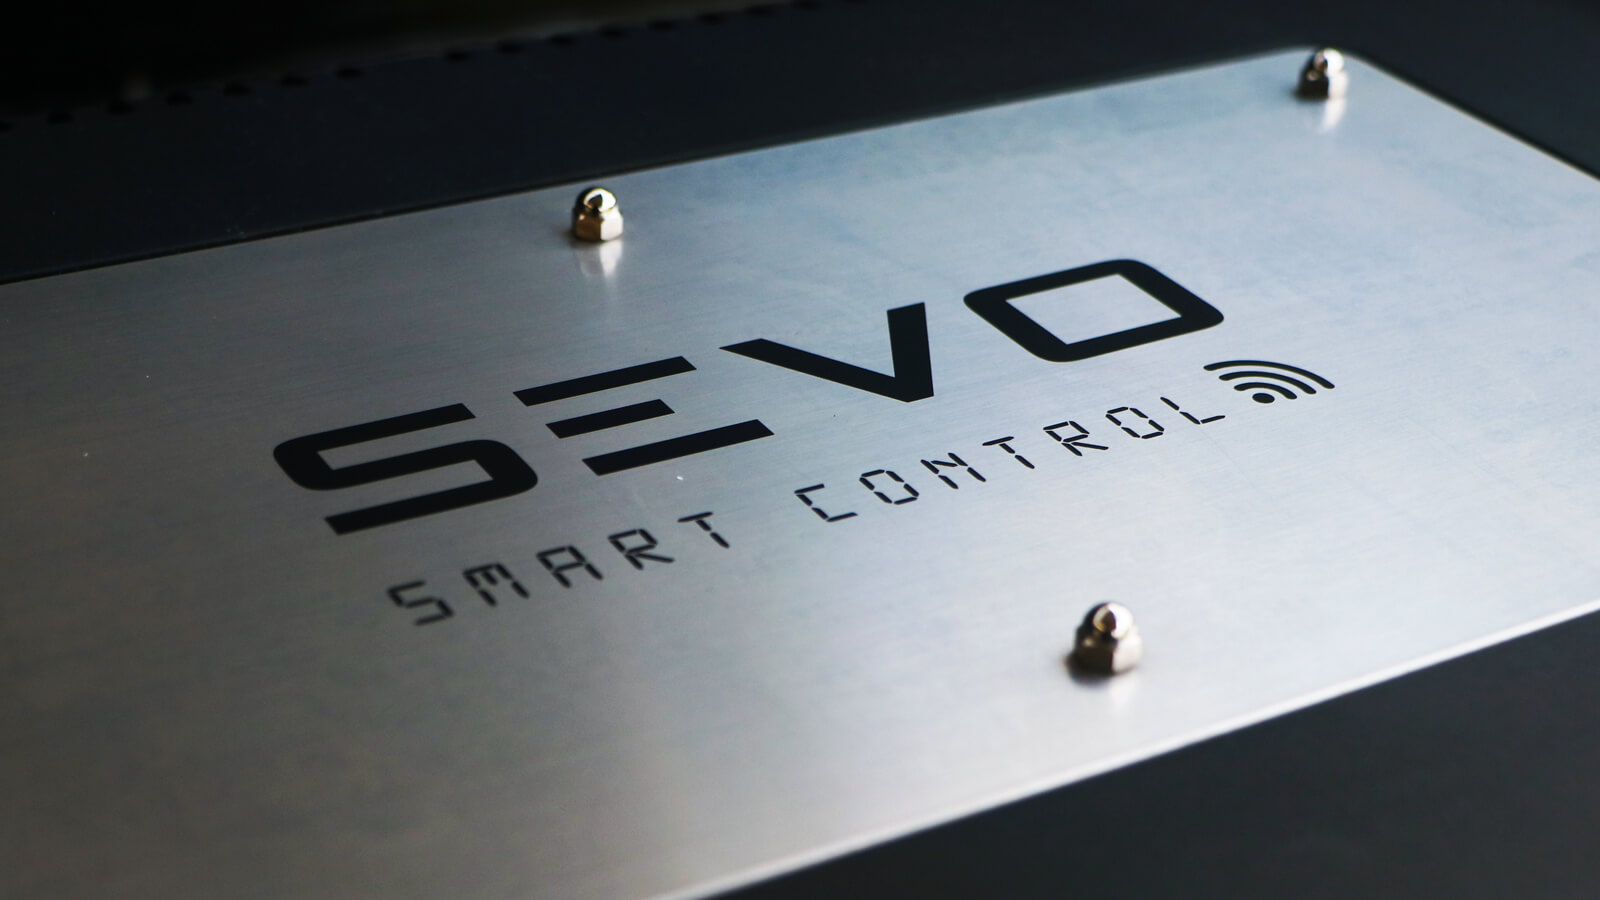 Sevo Smart Control Review